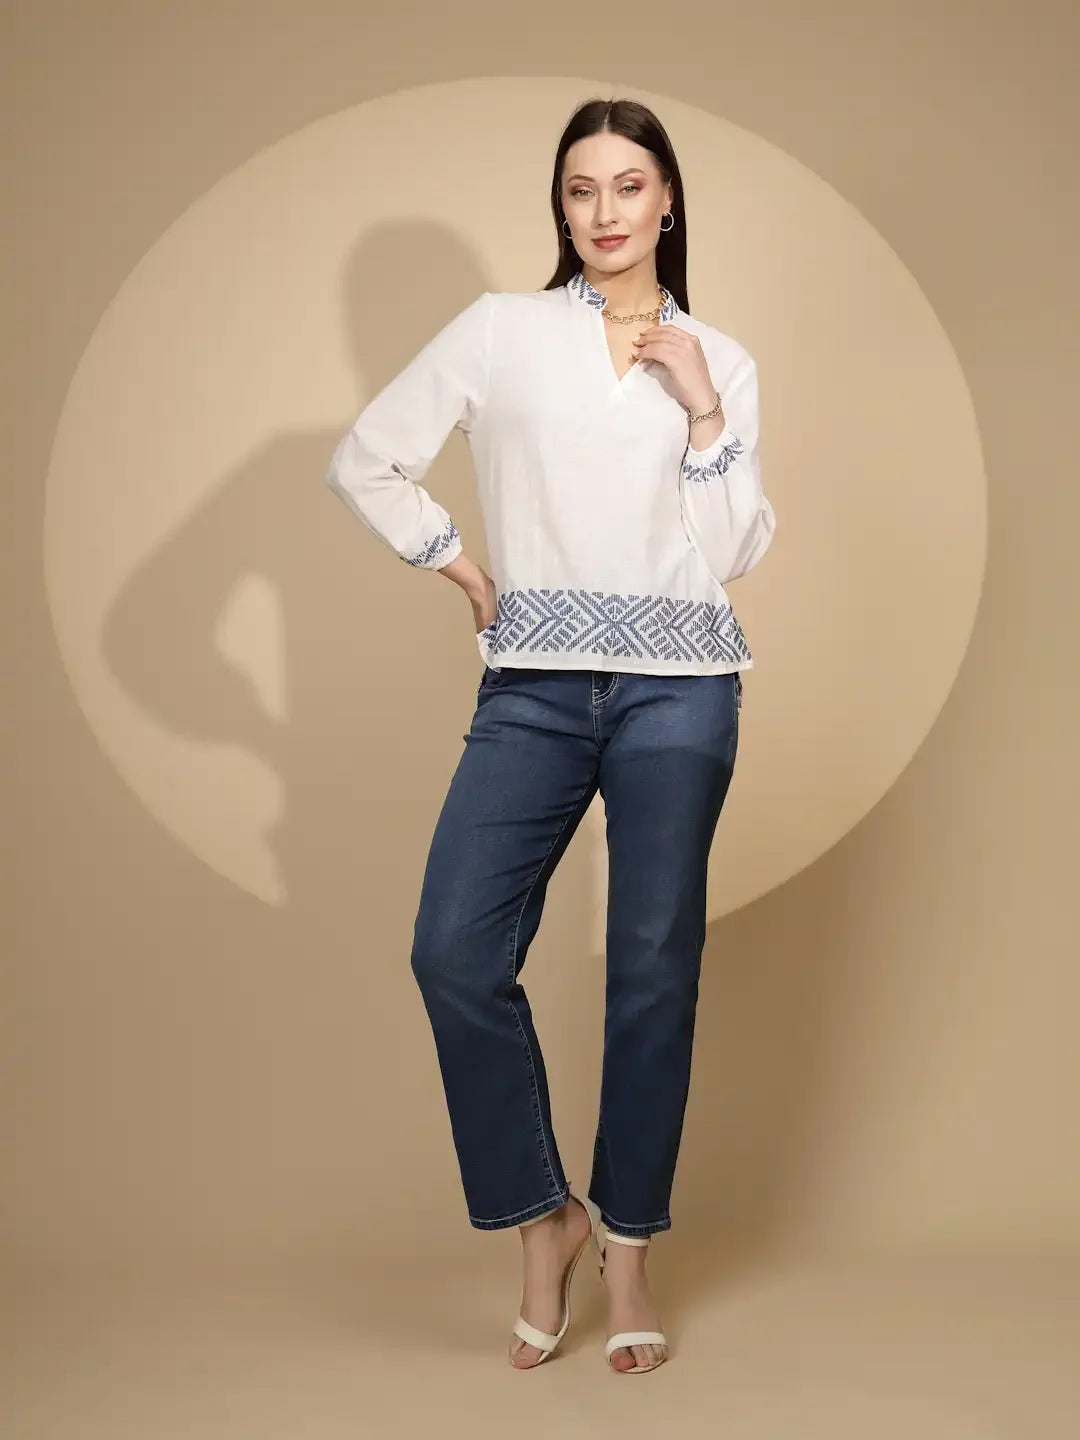 White Cotton Regular Fit Blouson Top For Women